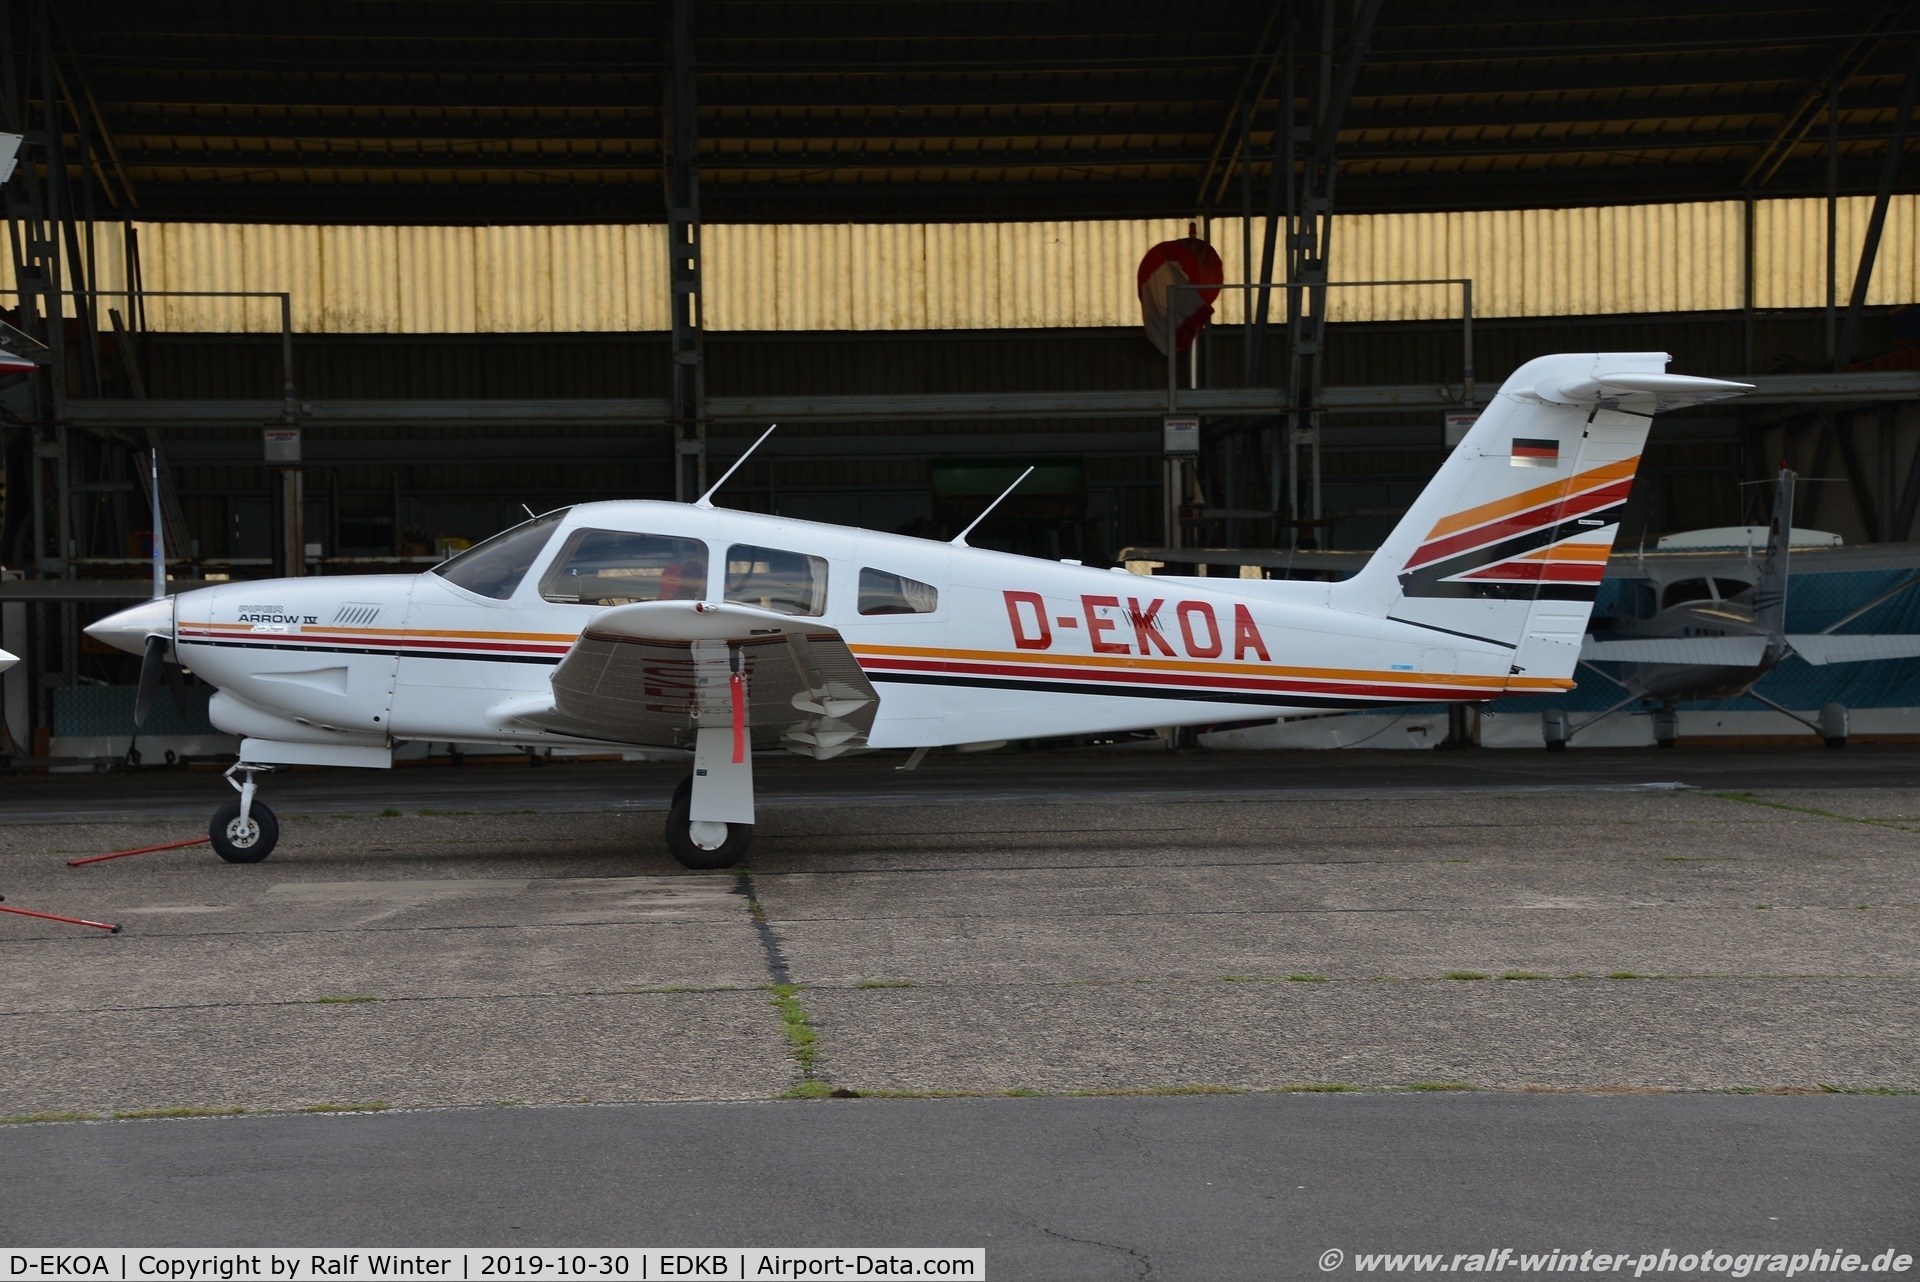 D-EKOA, 1981 Piper PA-28RT-201T Turbo Arrow IV Arrow IV C/N 28R-8131112, Piper PA-28RT-201T Turbo Arrow 4 - Private - 28R8131112 - D-EKOA - 30.10.2019 - EDKB